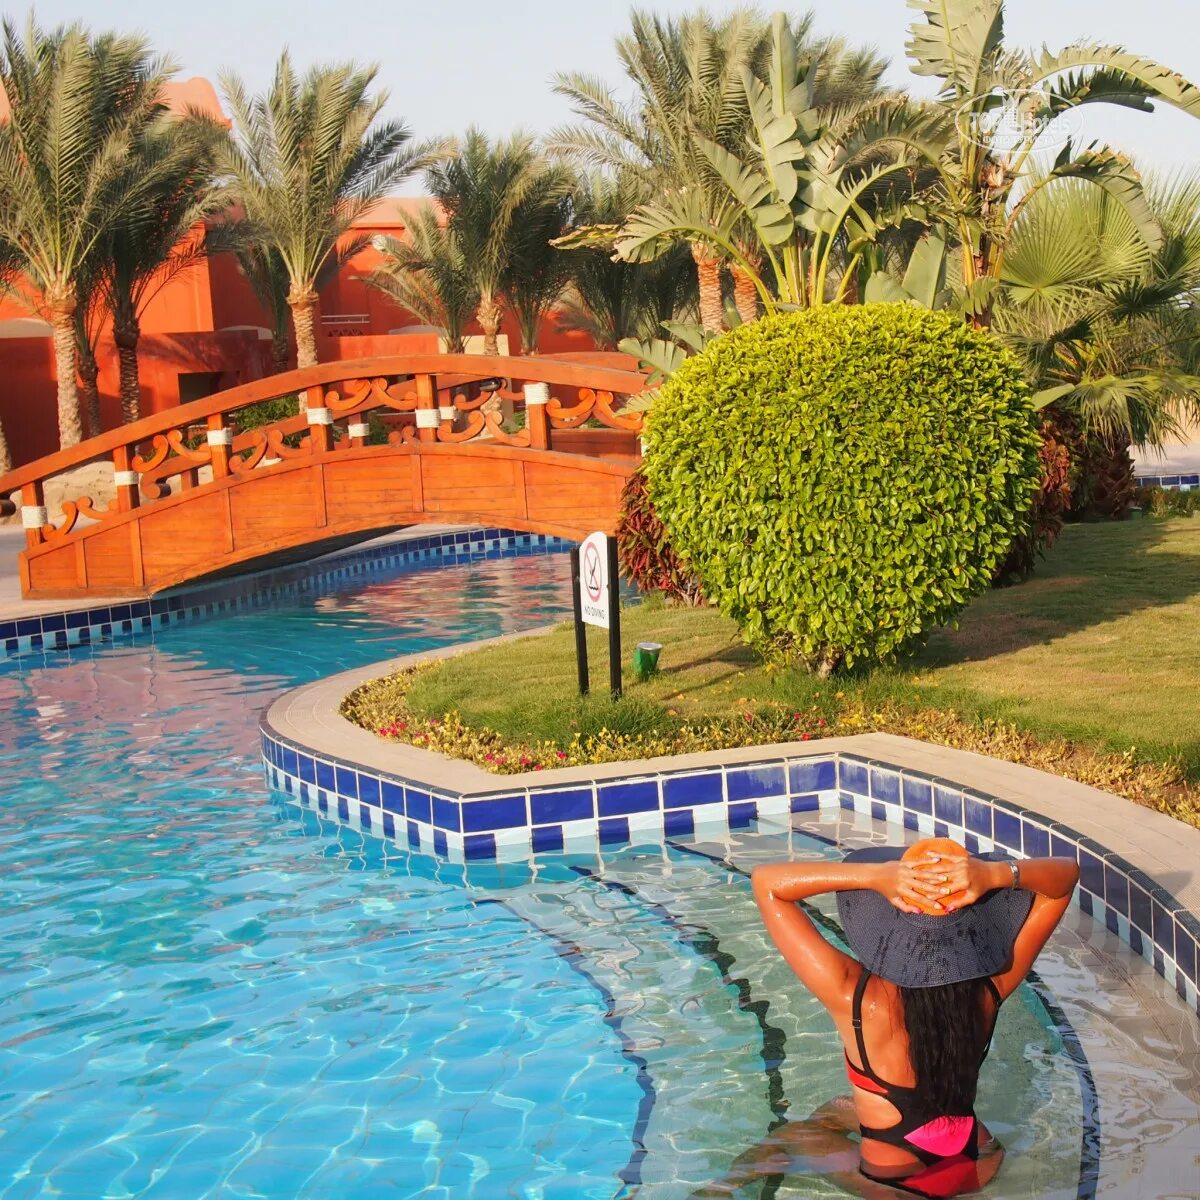 Отель шарм плаза 5. Sharm Grand Plaza Resort 5. Шарм Гранд Плаза Резорт. Sharm Grand Plaza 5* Шарм. Grand Plaza Resort Sharm территория отеля.